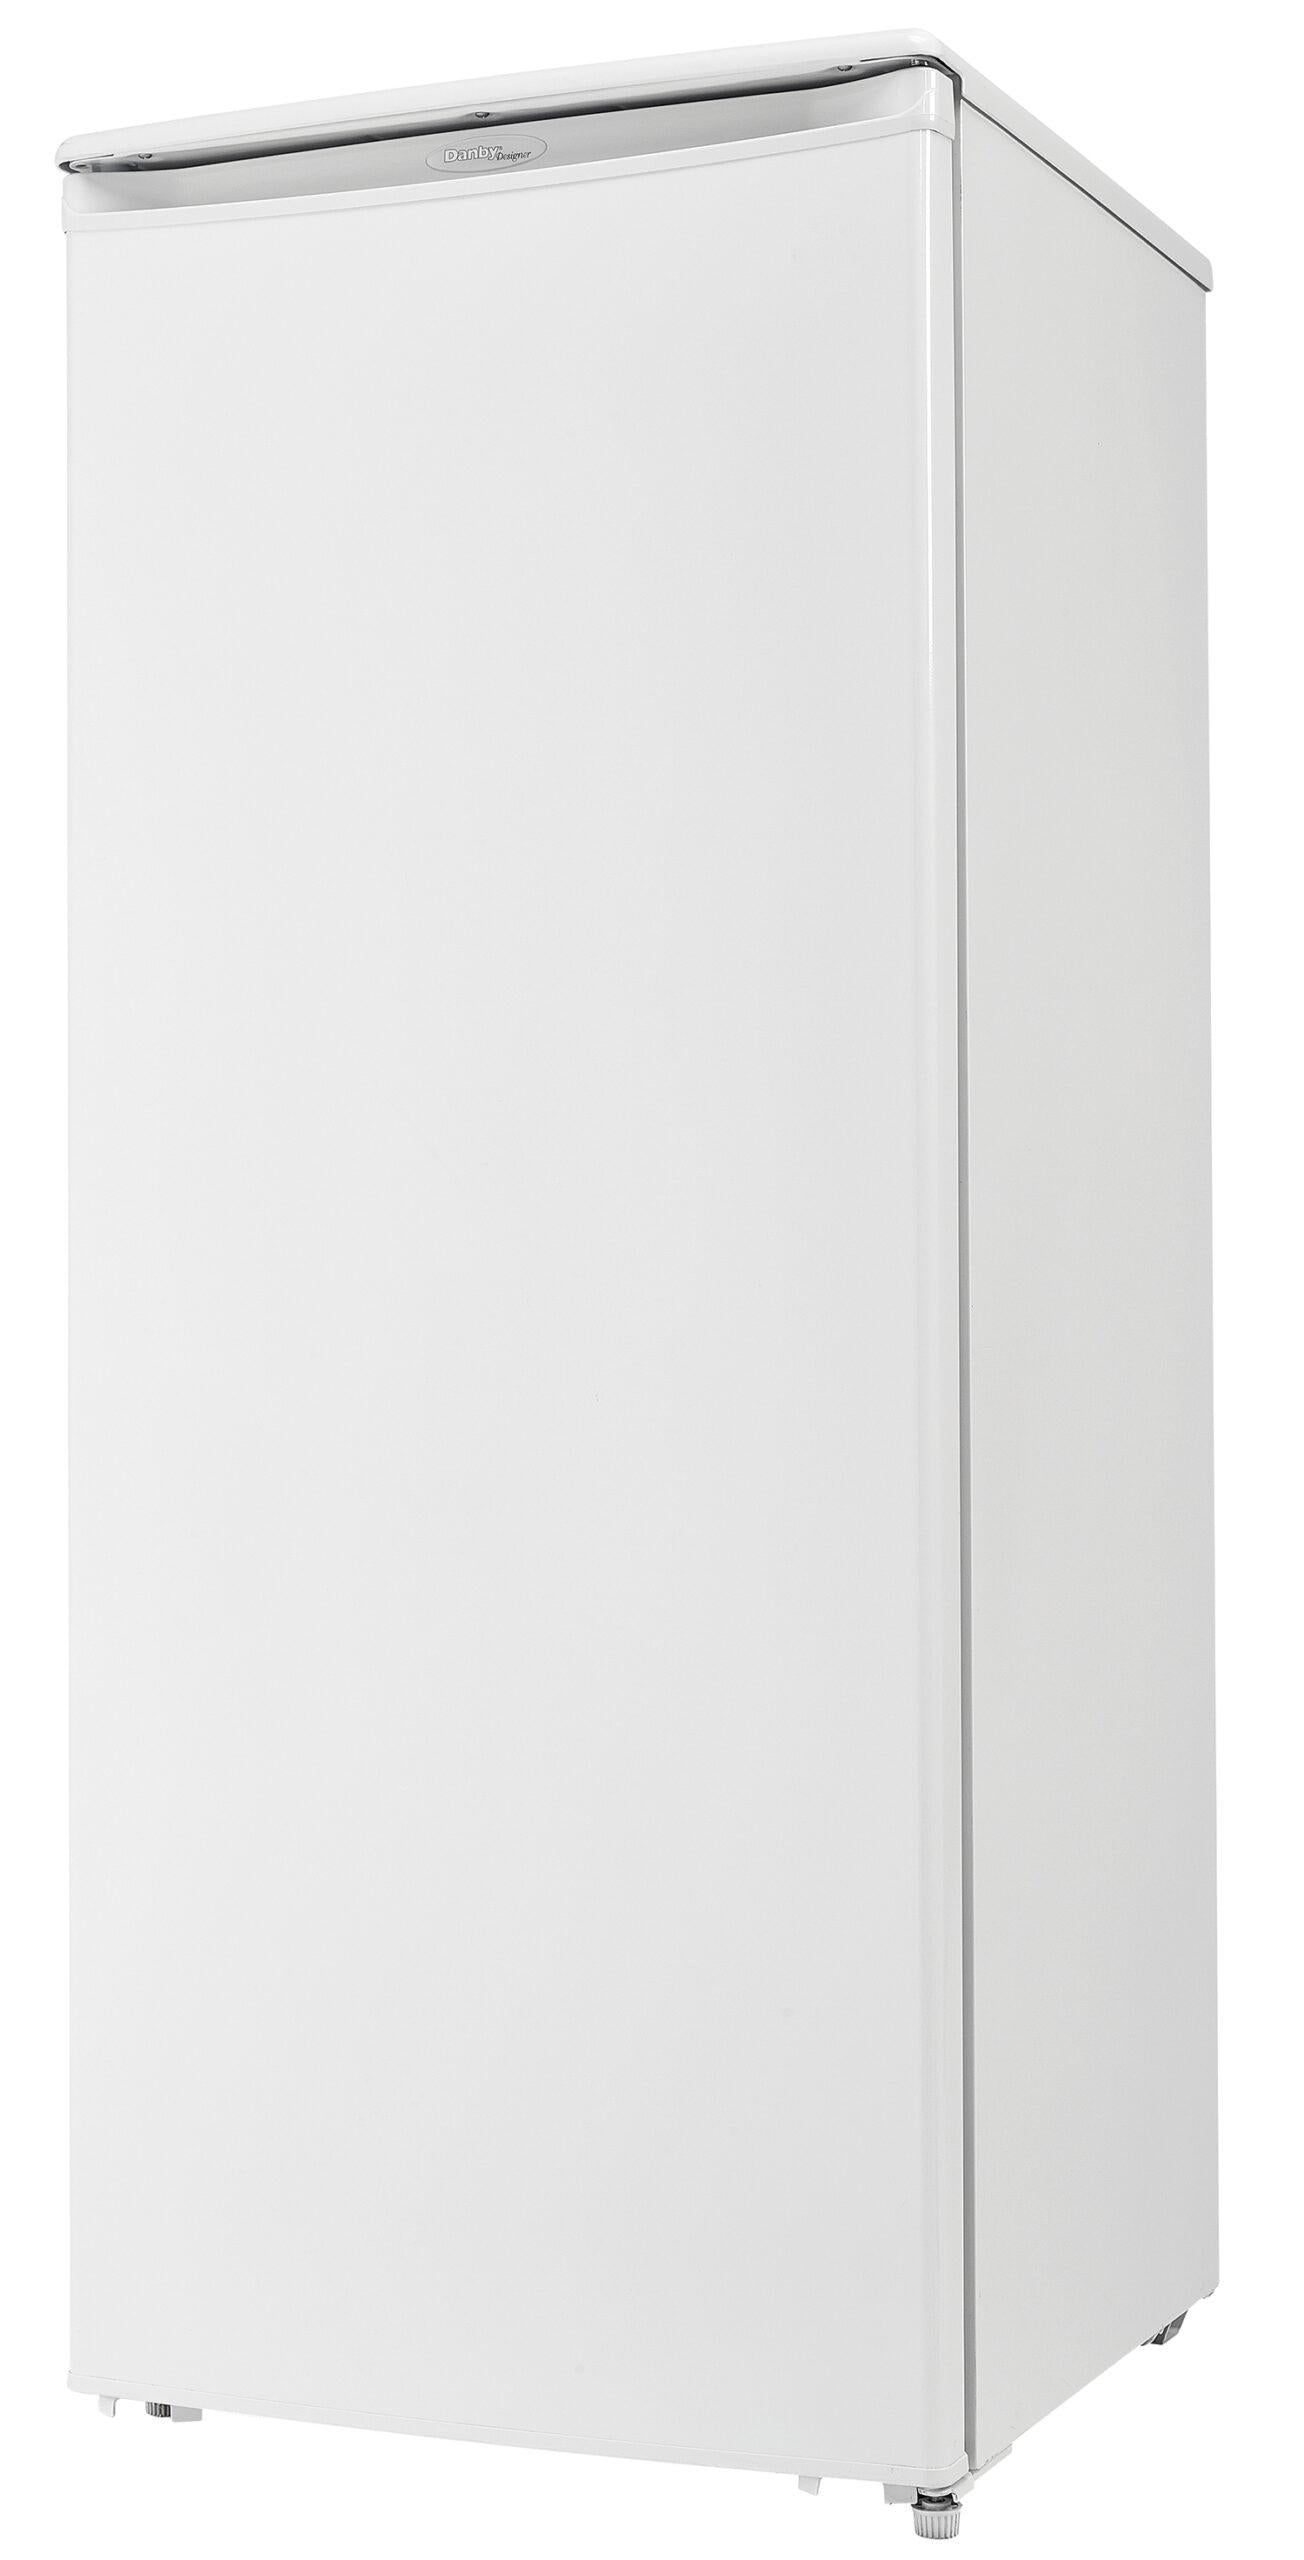 Danby 16.7 Cu. Ft. White Upright Freezer - DUF167A4WDD